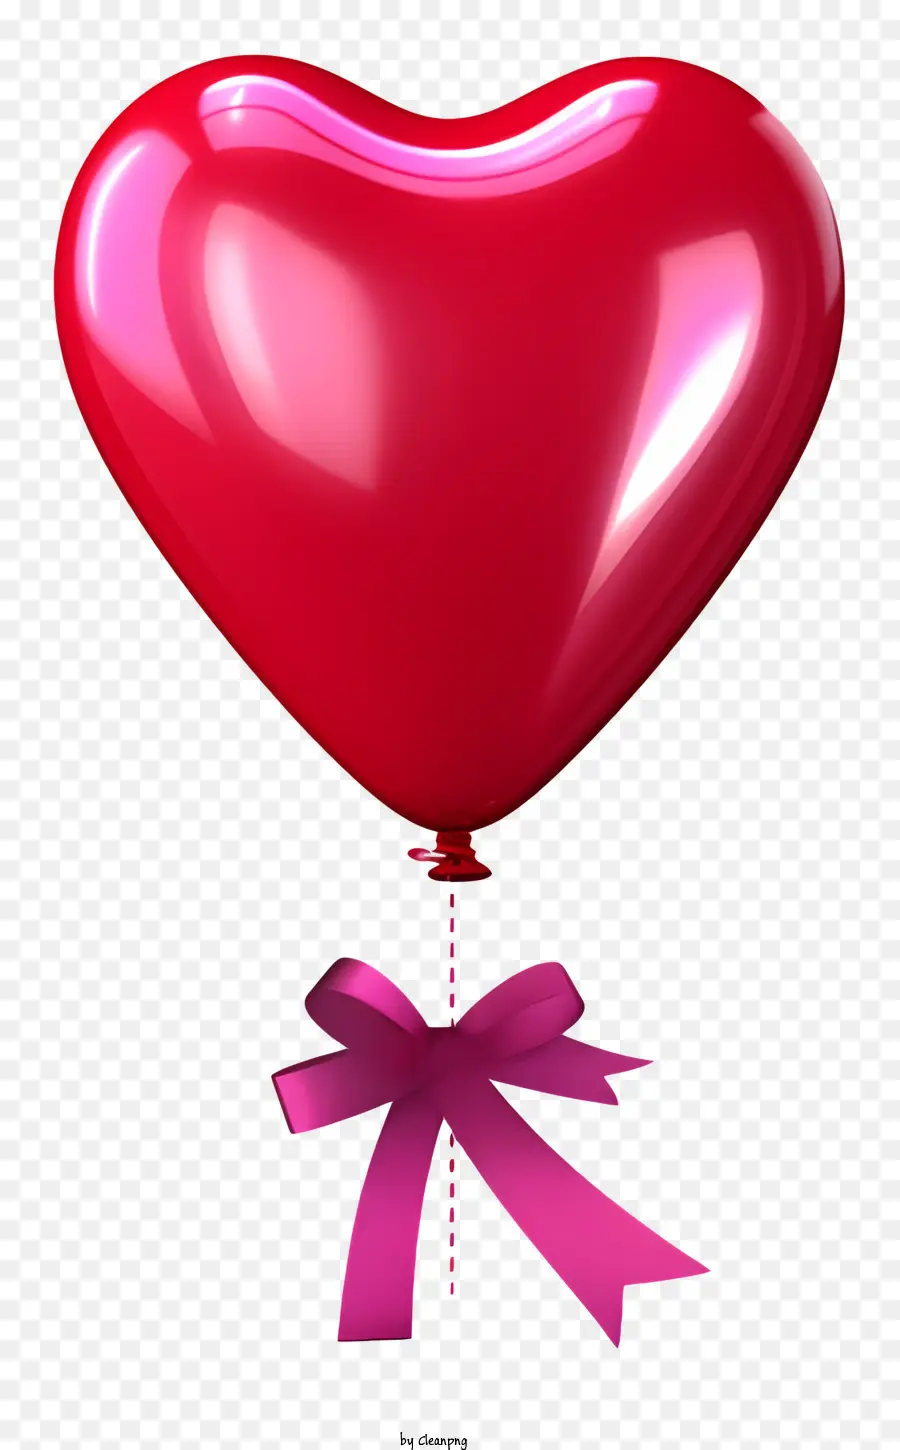 Roter Ballon - Roter Herzballon mit rosa Band hängt romantisch